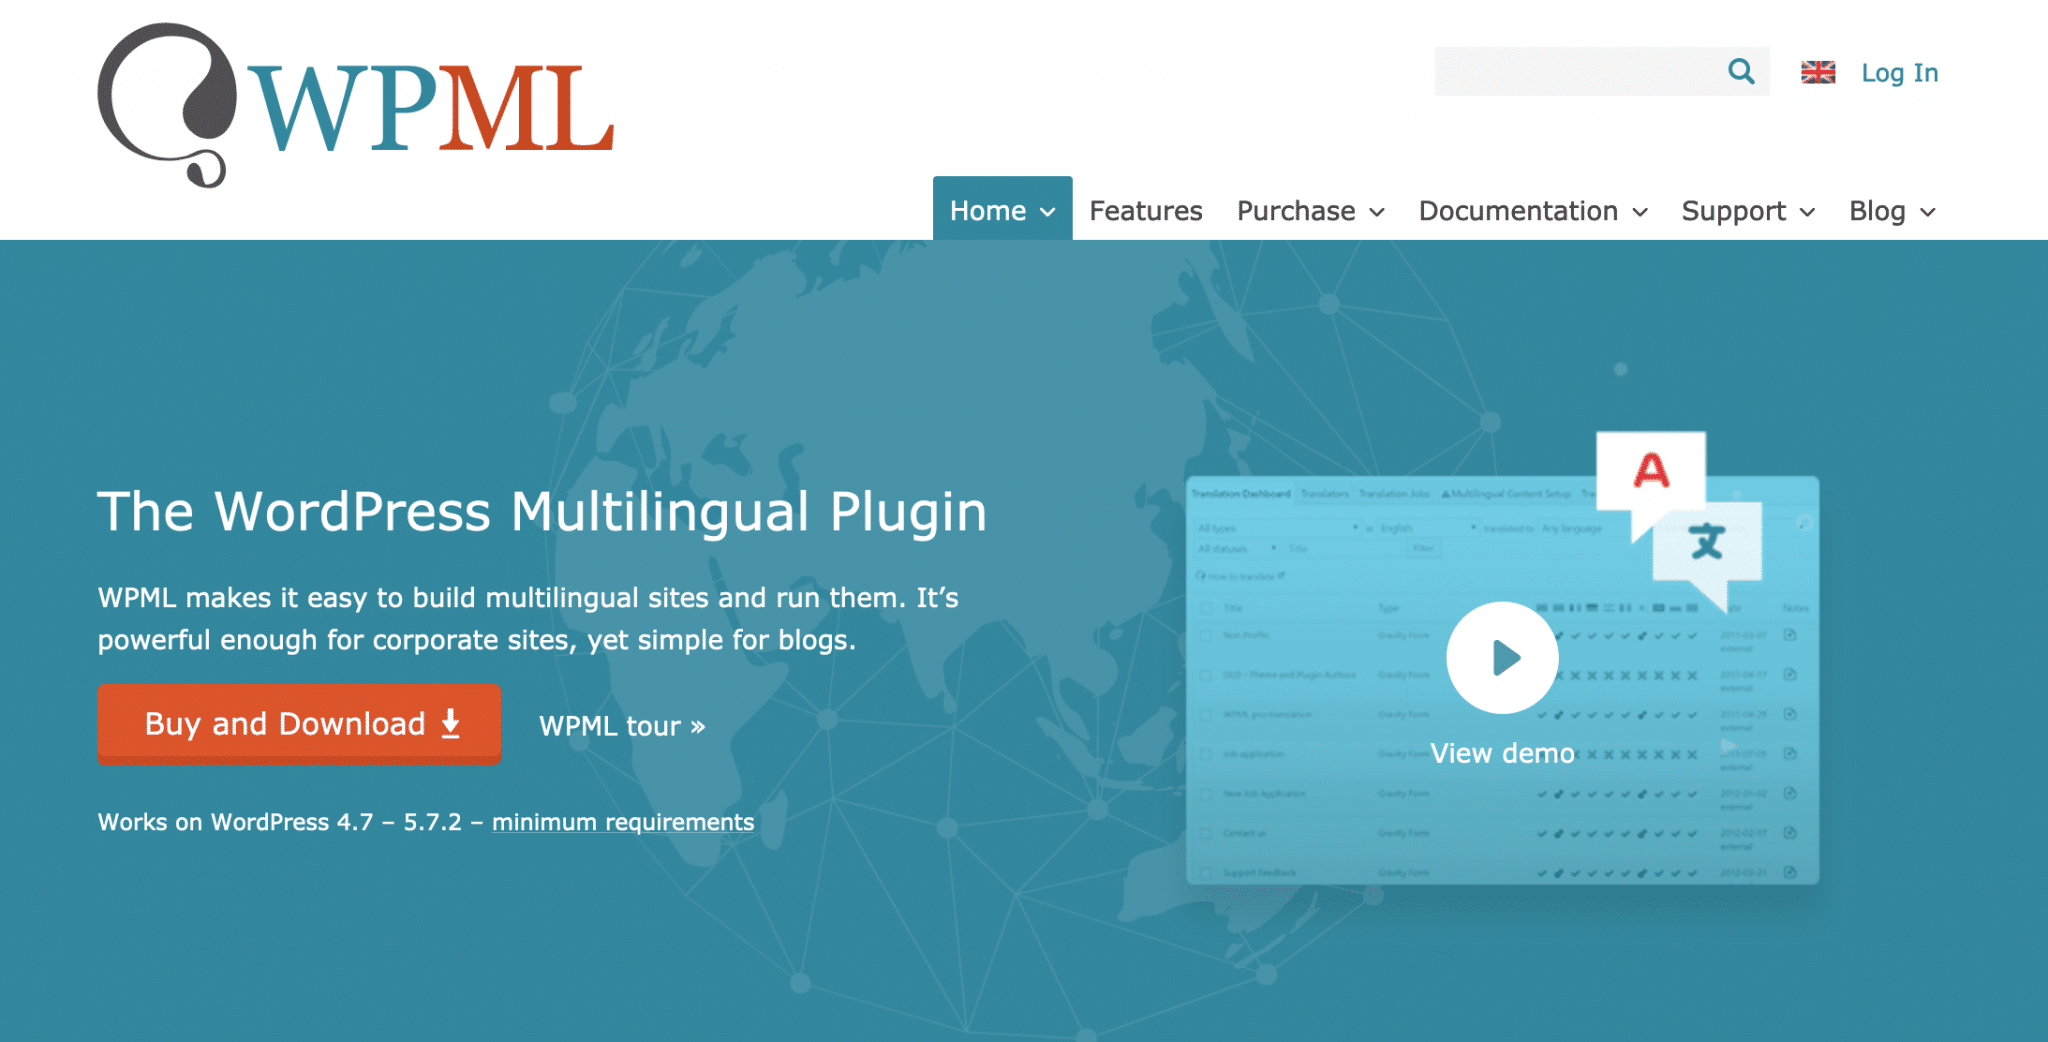 WordPress multilingual plugin WPML dashboard website.